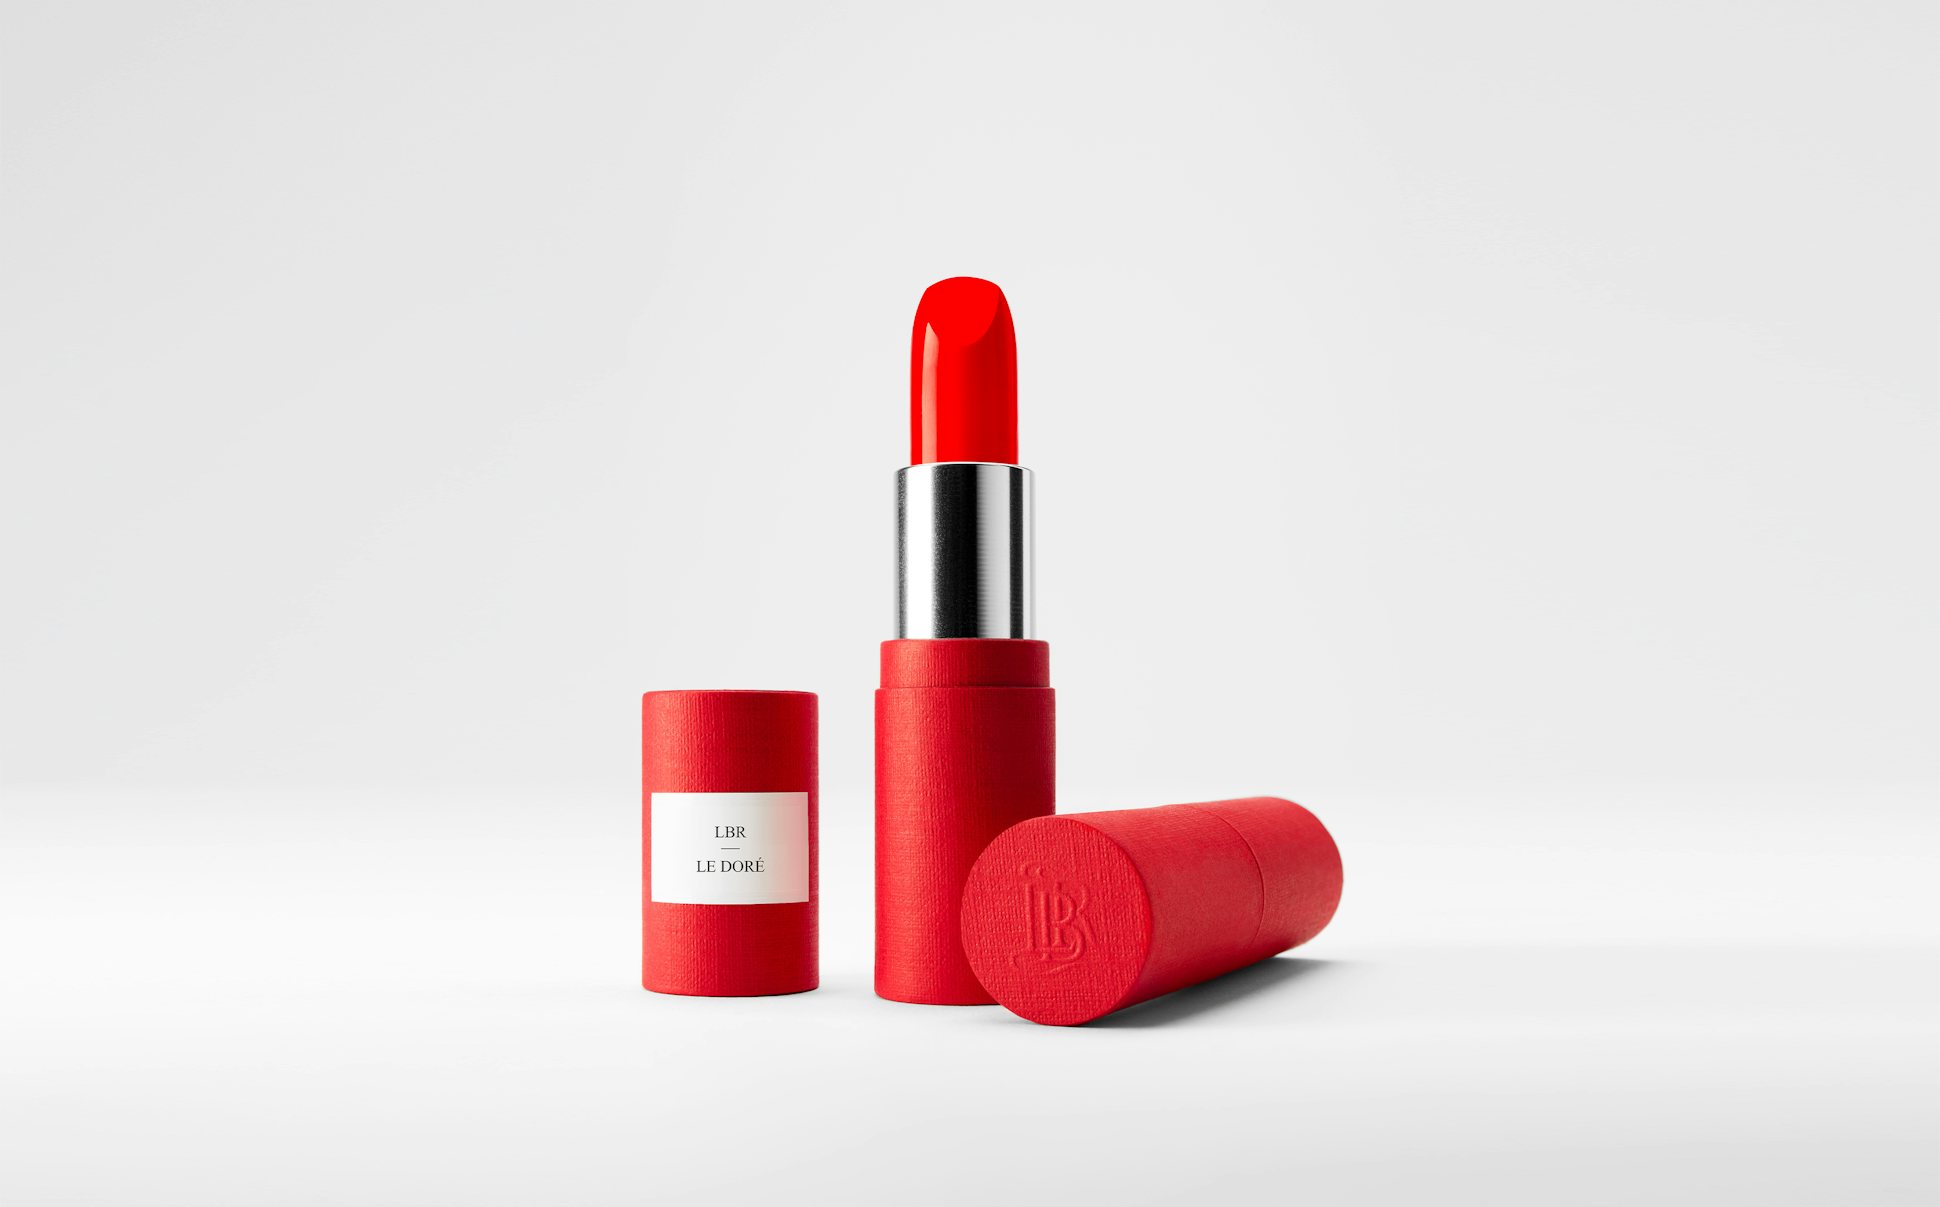 La bouche rouge Le Doré lipstick in the red paper case